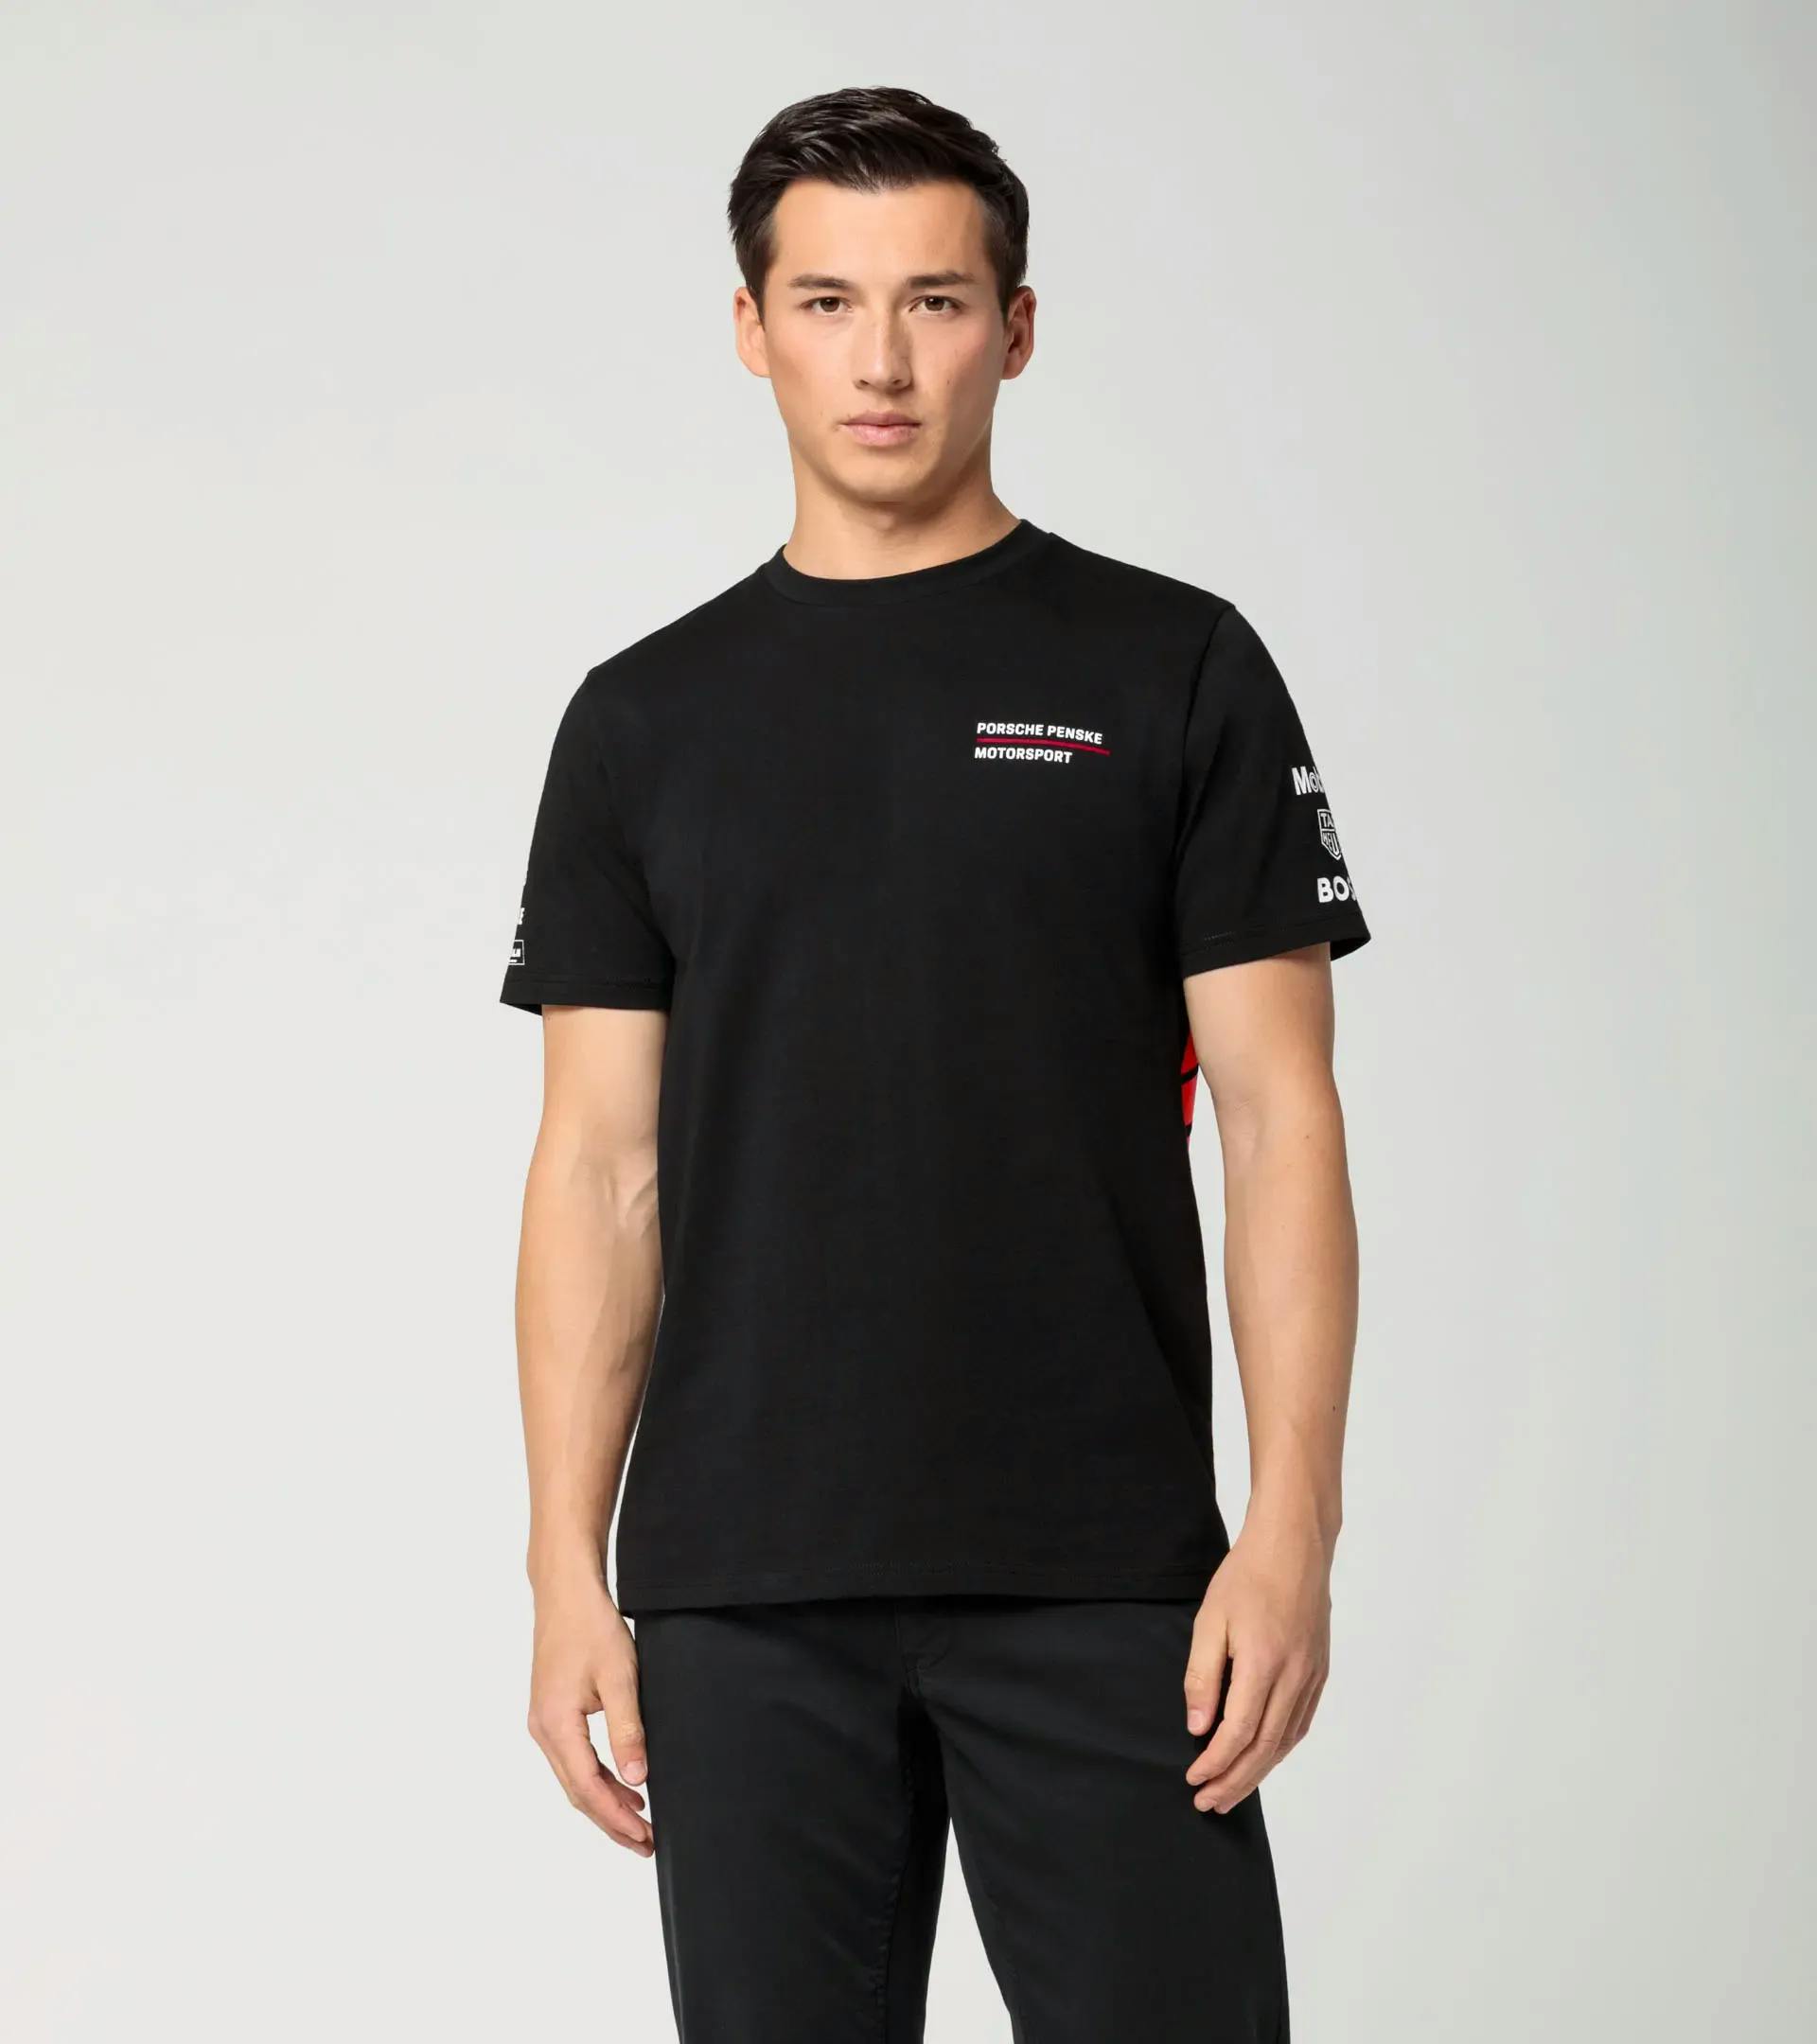 T-shirt unisex – Porsche Penske Motorsport 5